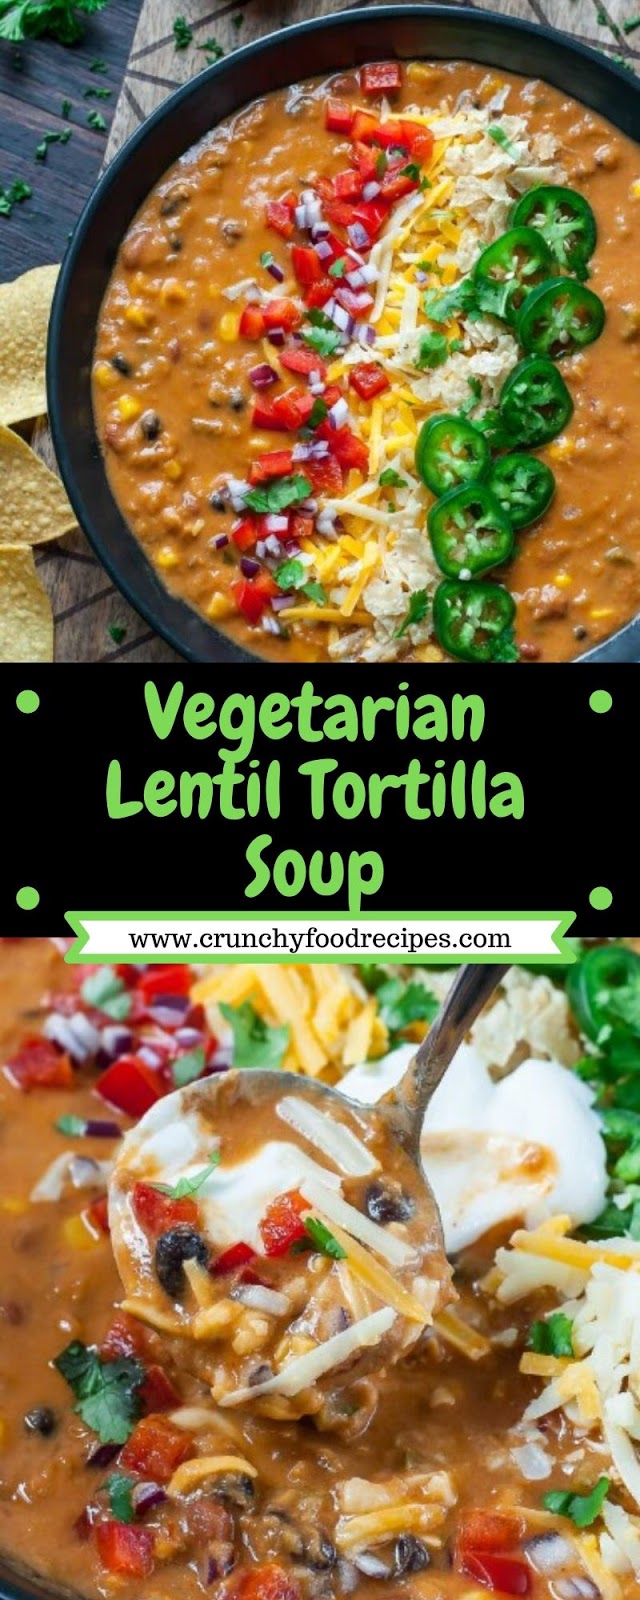 Vegetarian Lentil Tortilla Soup